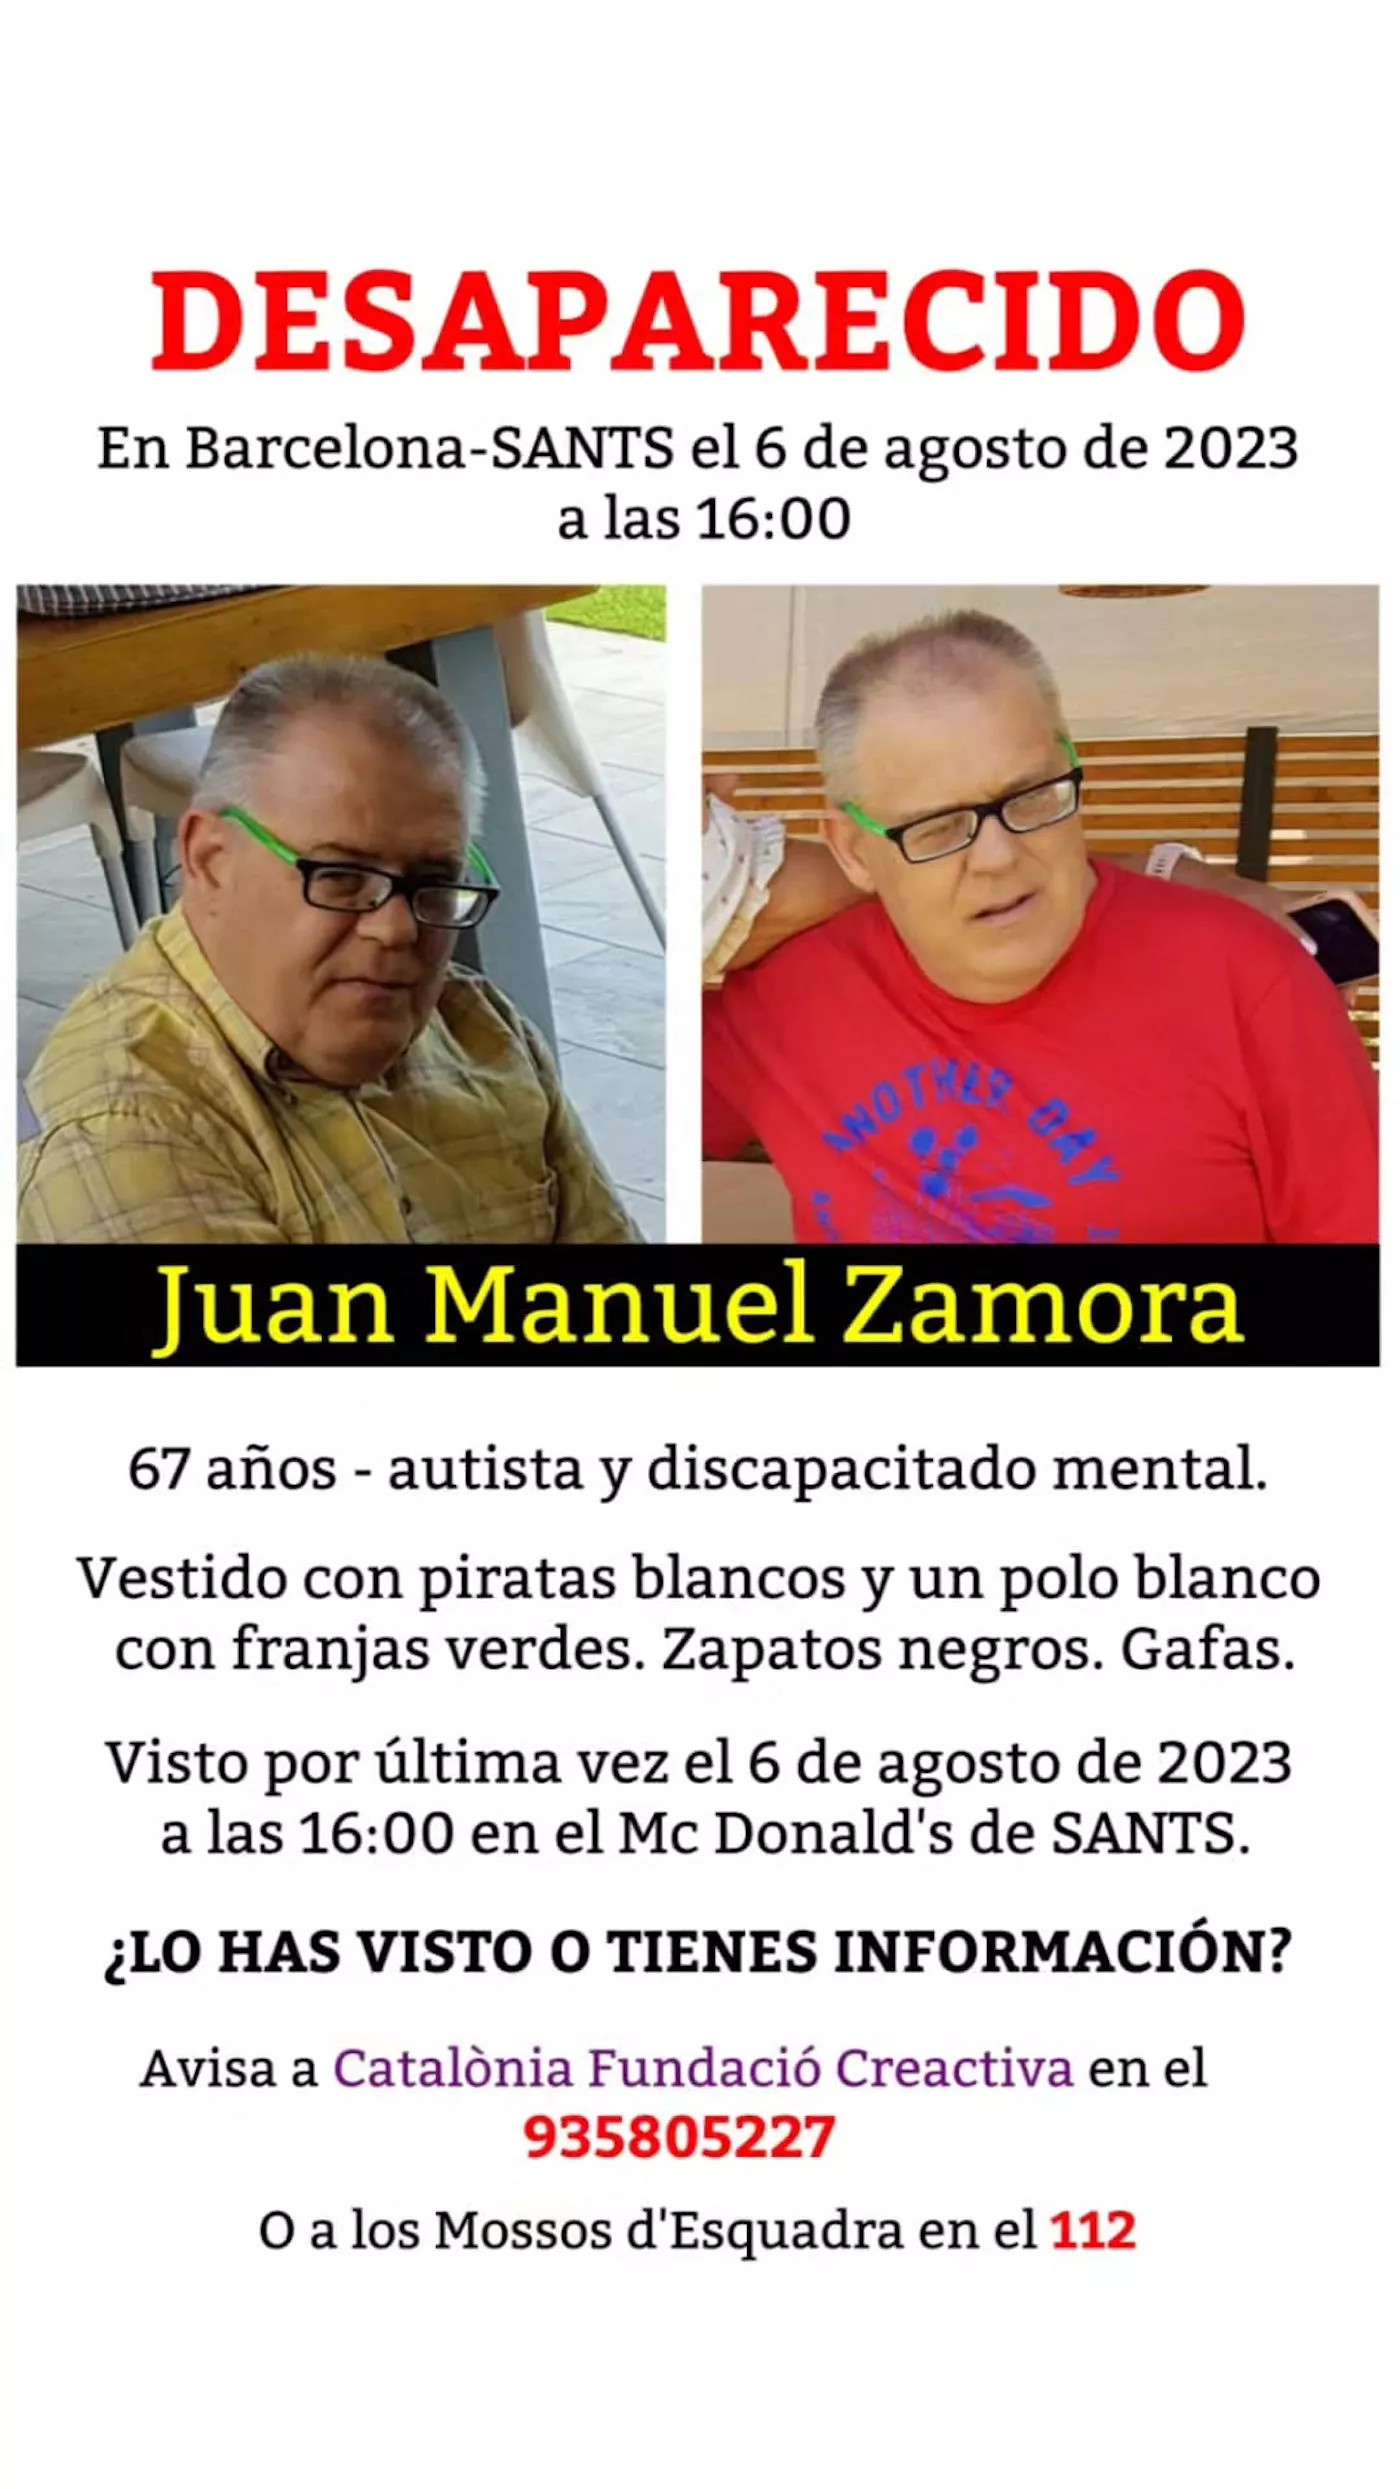 Aspecto de Juan, el hombre desaparecido en Barcelona / MOSSOS